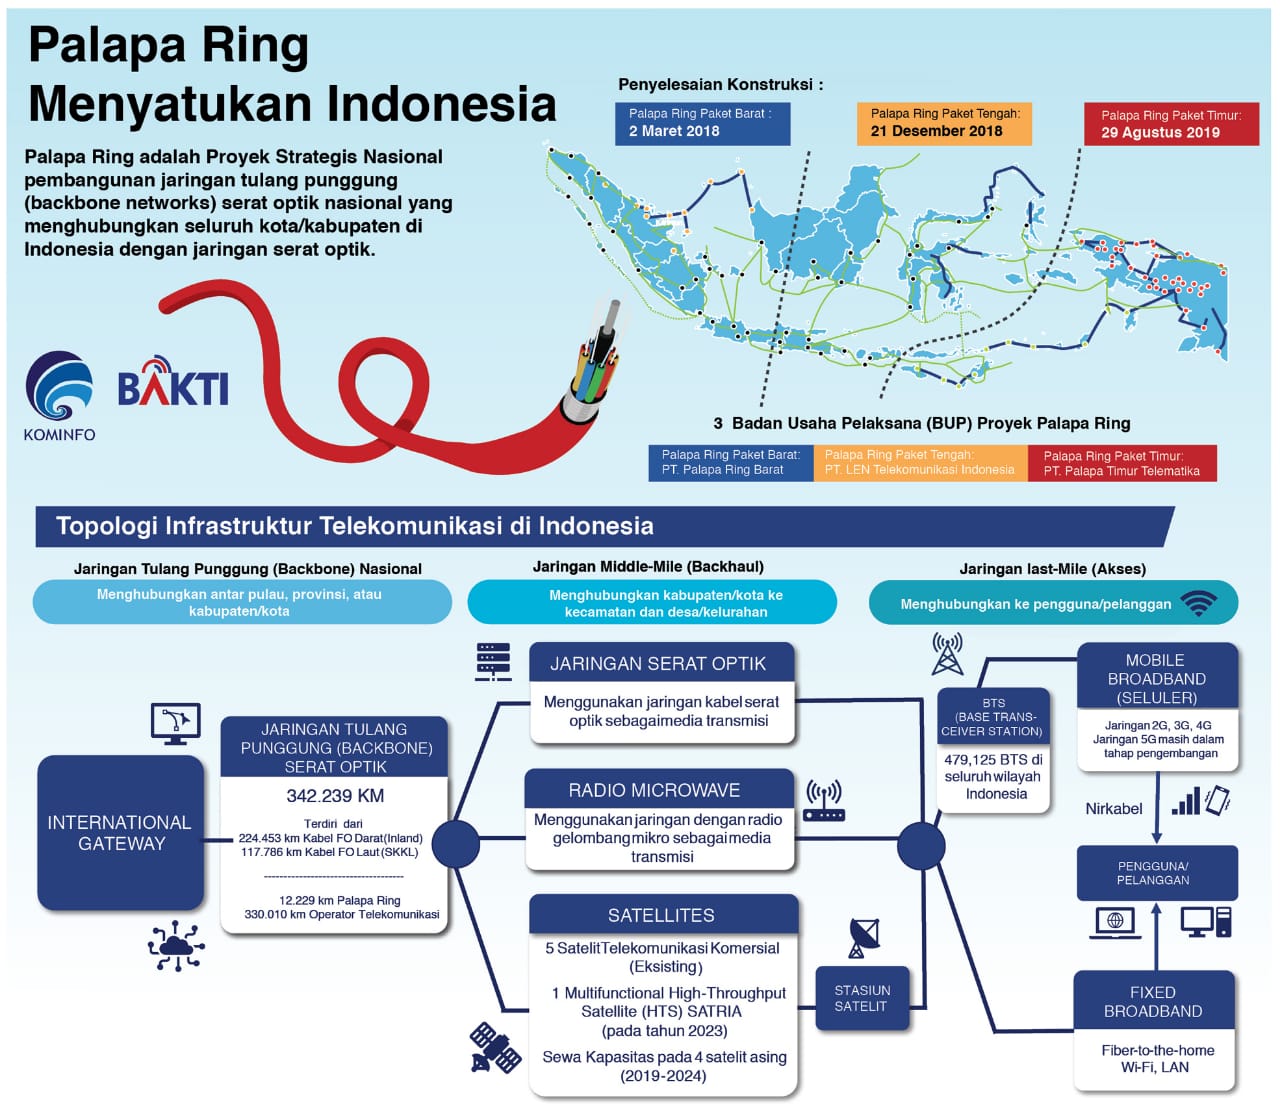 Palapa Ring Menyatukan Indonesia 